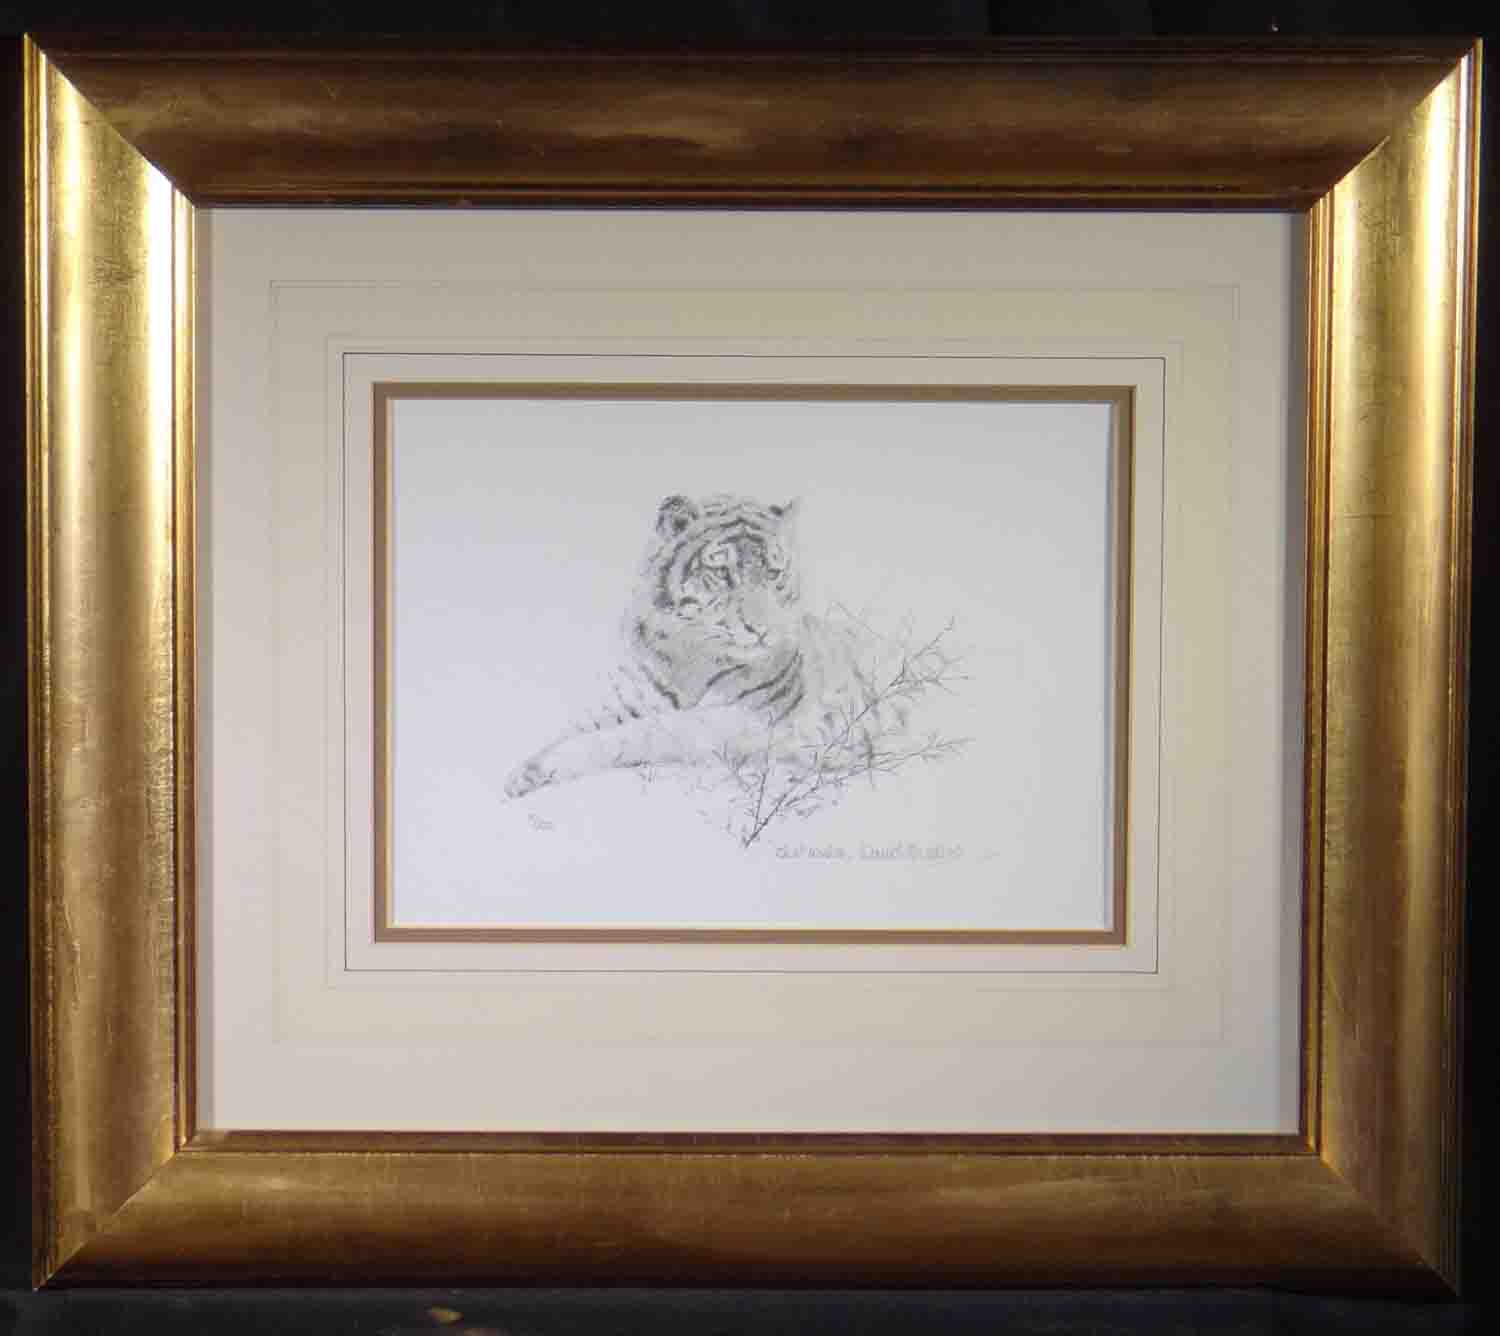 david shepherd Portrait of a Tiger sketch